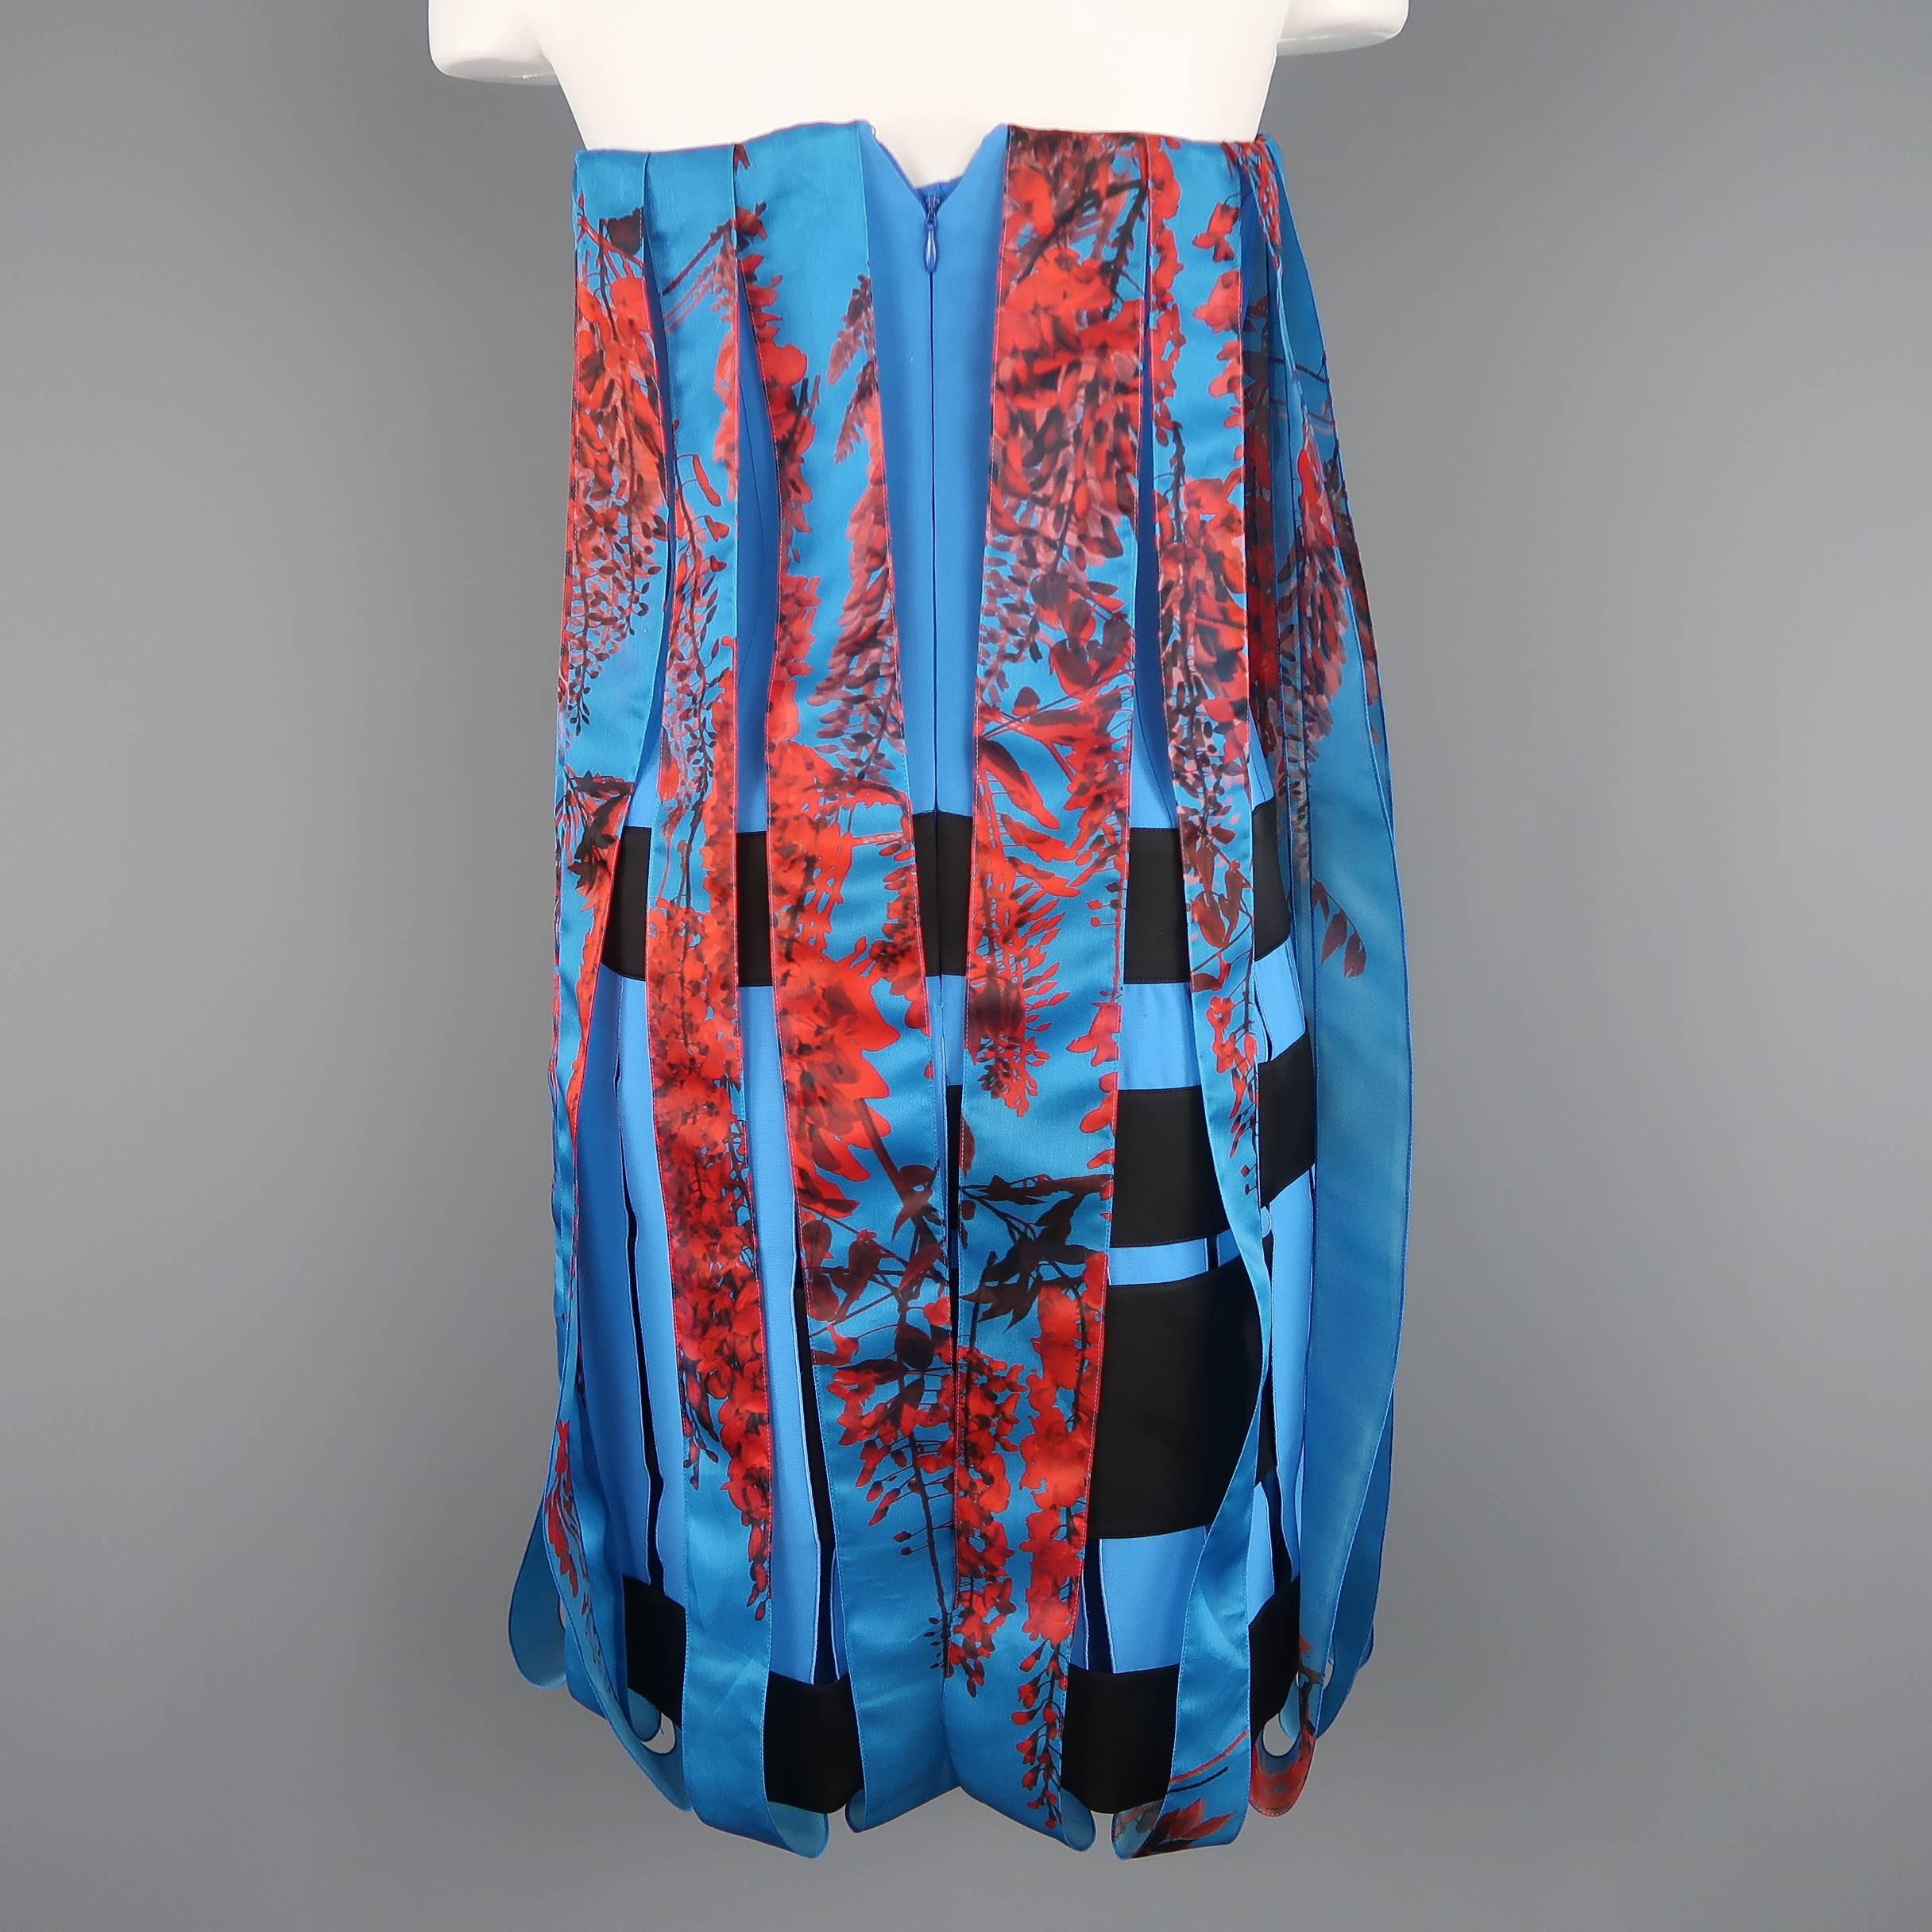 Christian Dior Dress - Spring 2014 Runway - Blue, Red, Floral, Silk, Cocktail 5